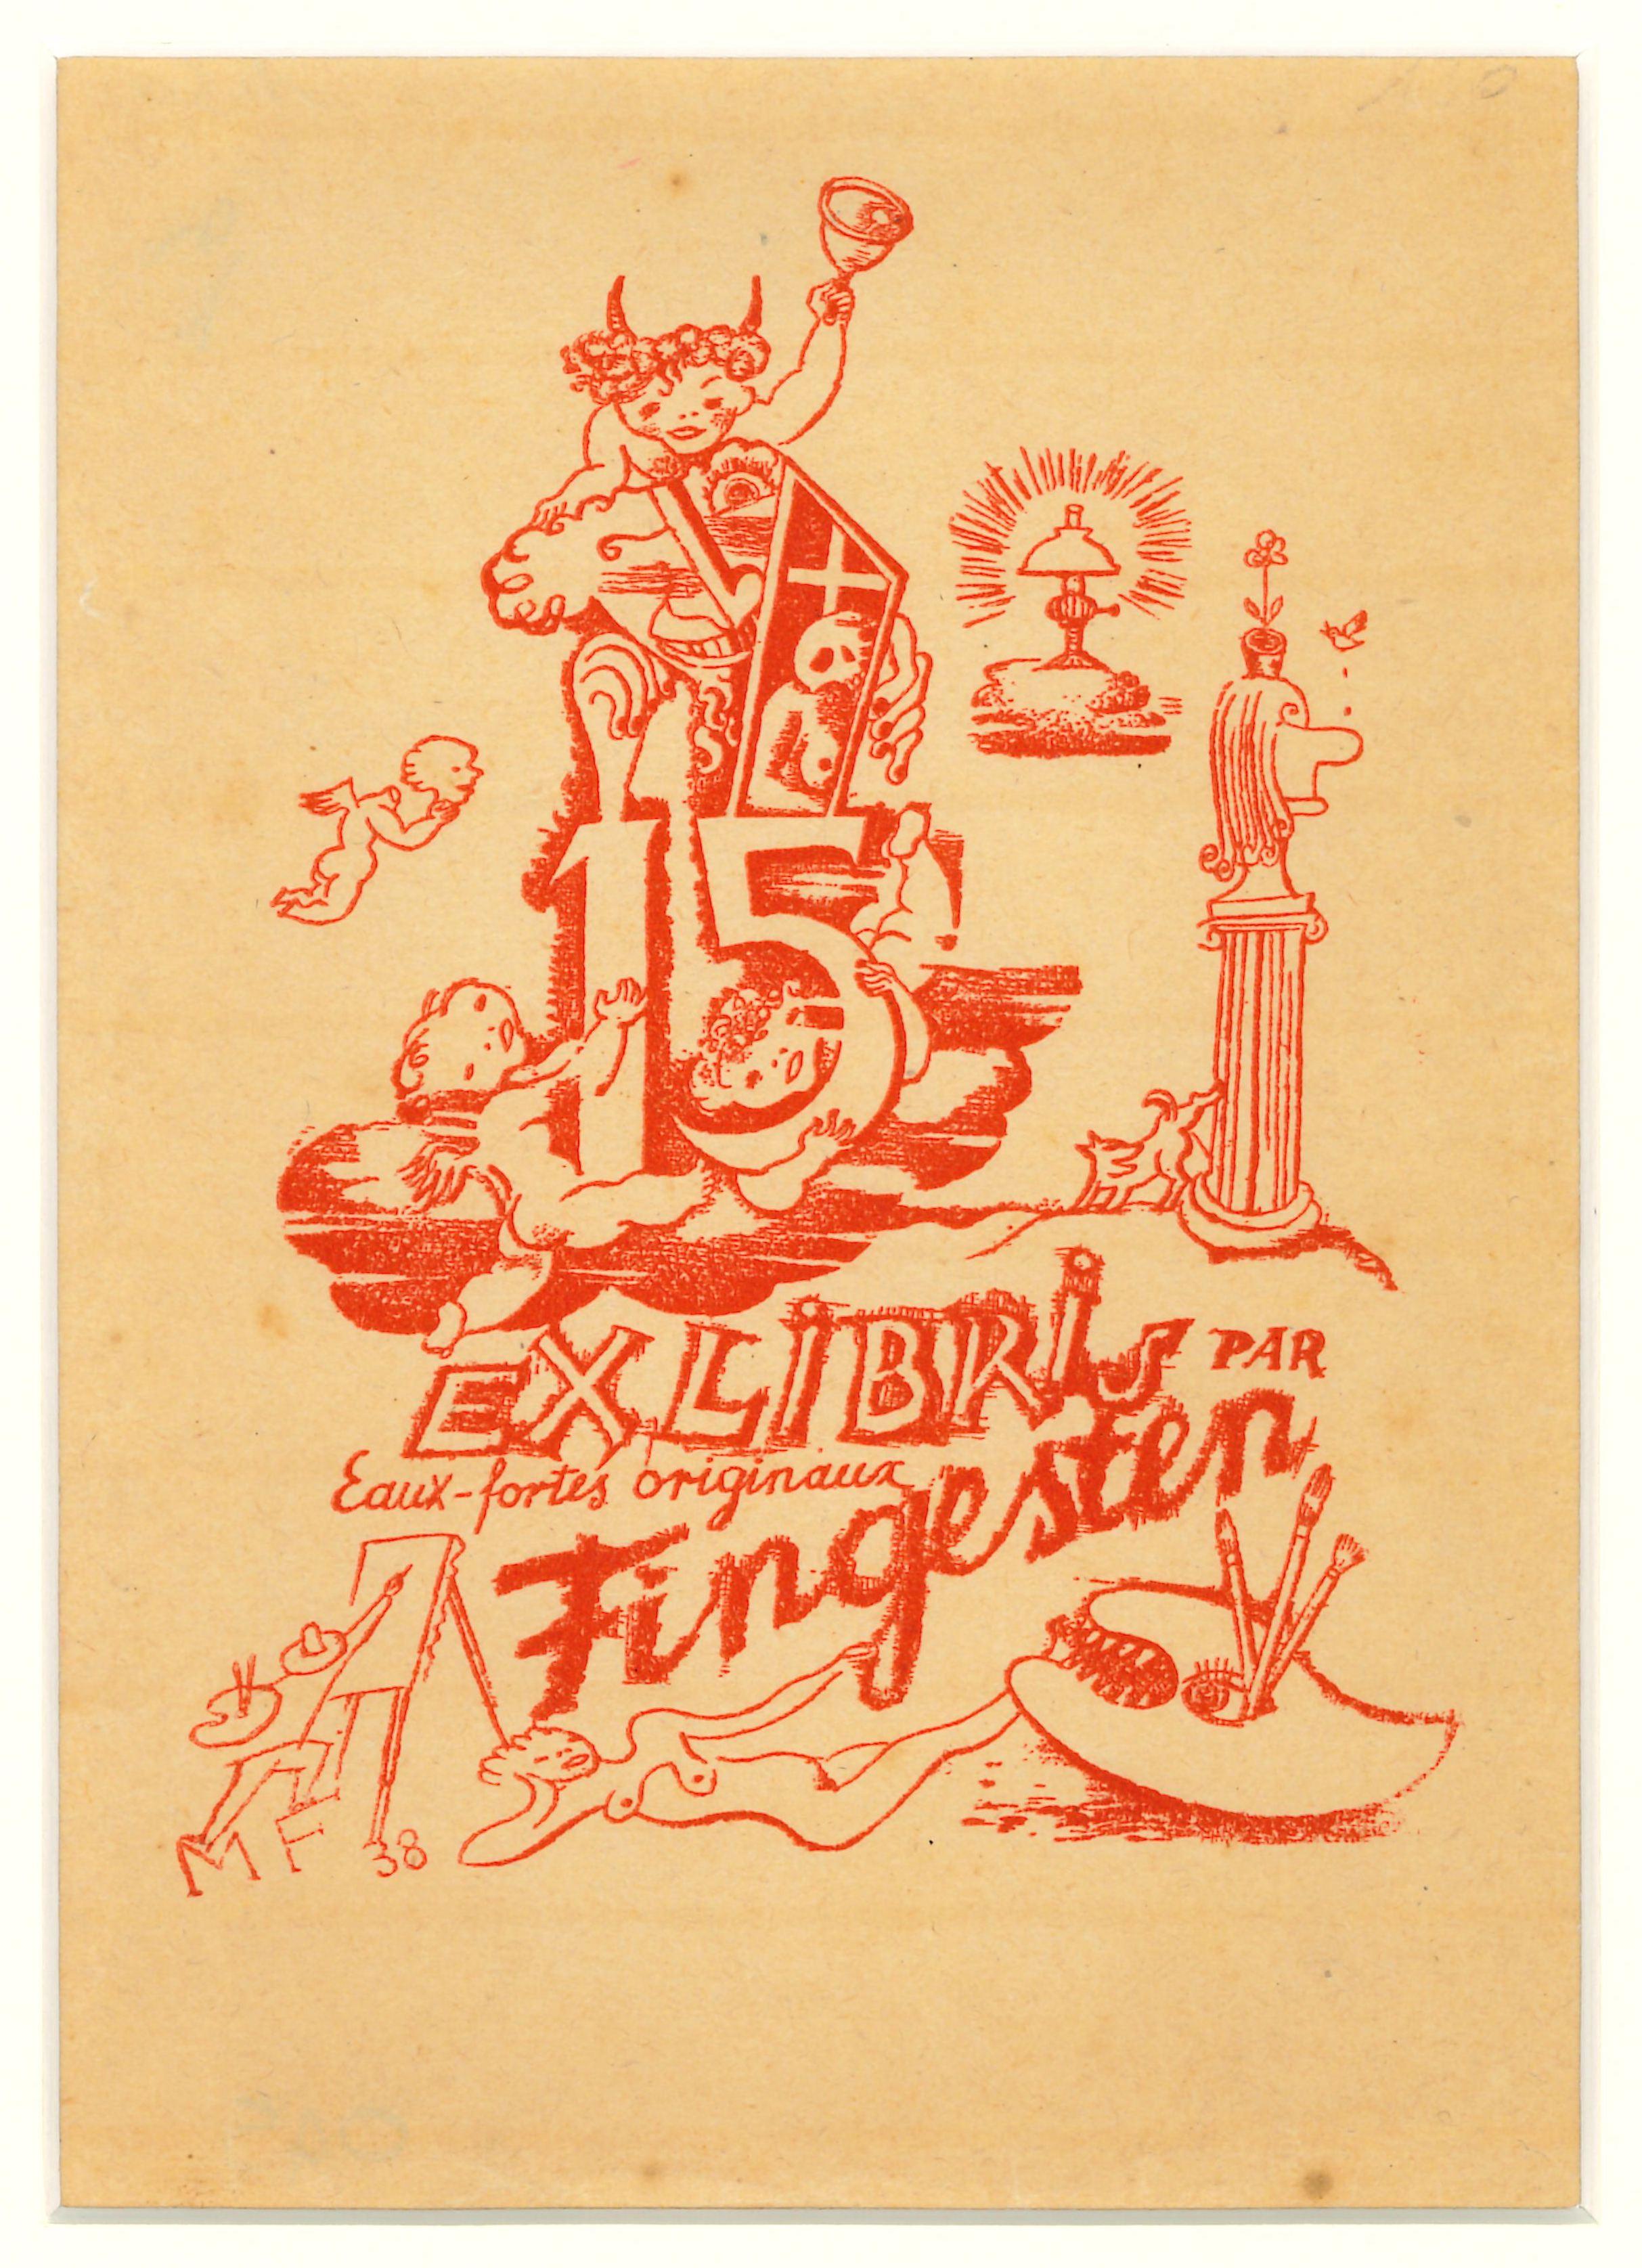 Michel Fingesten Figurative Print - Ex Libris - 15 par Fingensten - Original Woodcut by M. Fingesten - 1938